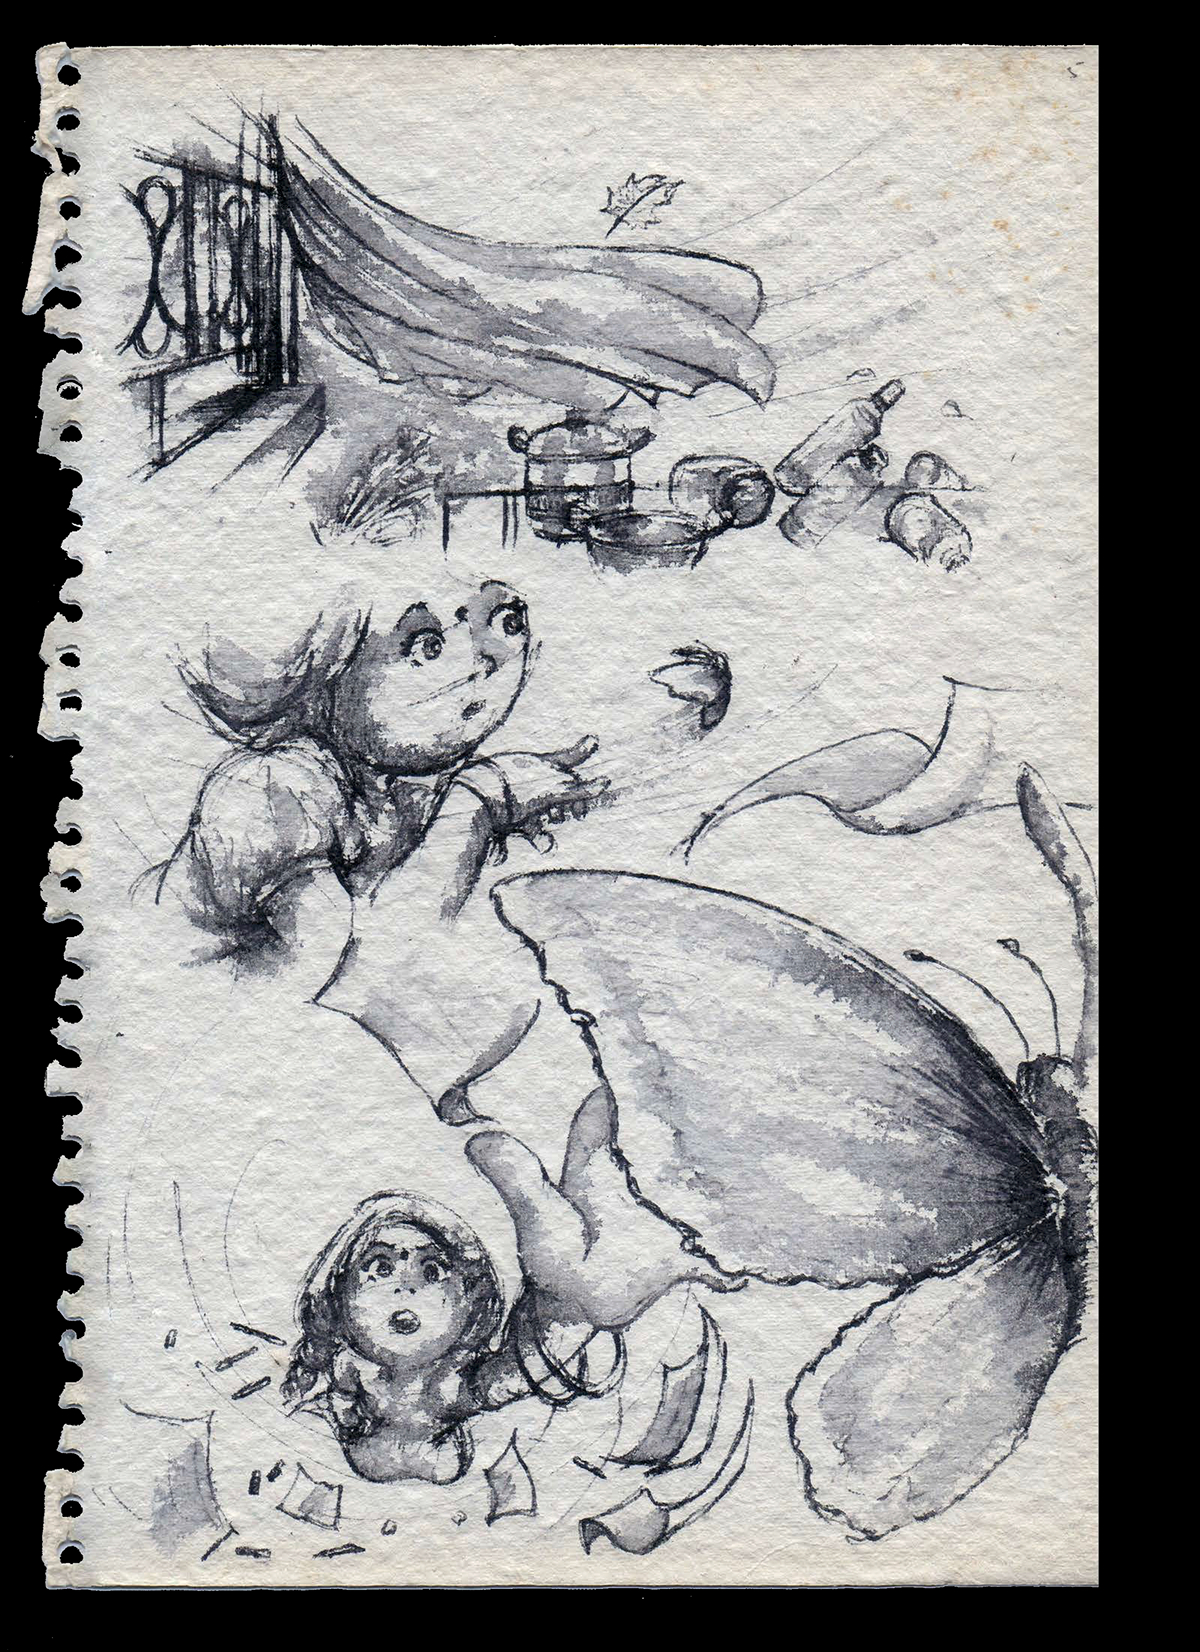 Graphic Novel ILLUSTRATION  Drawing  Graphic Narrative narrative graphic Zine  storyboard DAUGHTER adobeawards